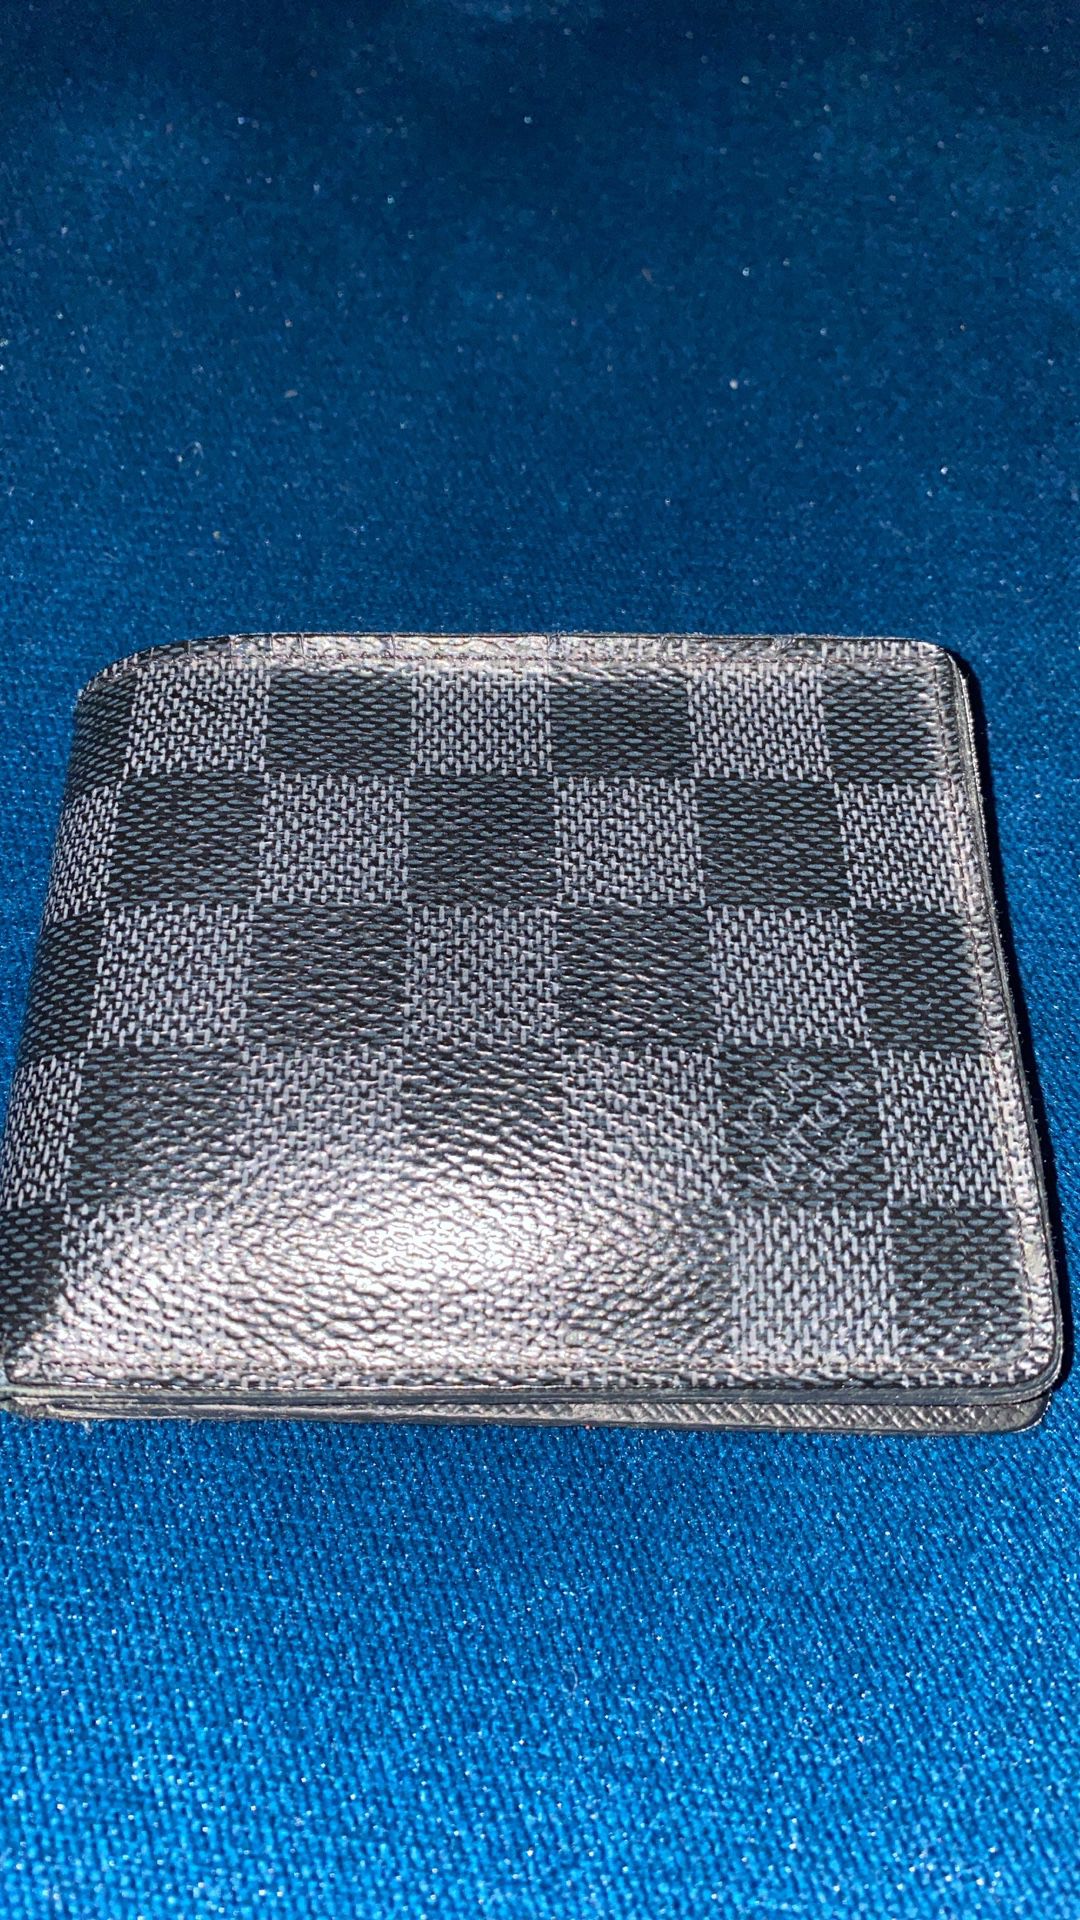 Louis Vuitton Monogram Multiple Wallet for Sale in San Diego, CA - OfferUp